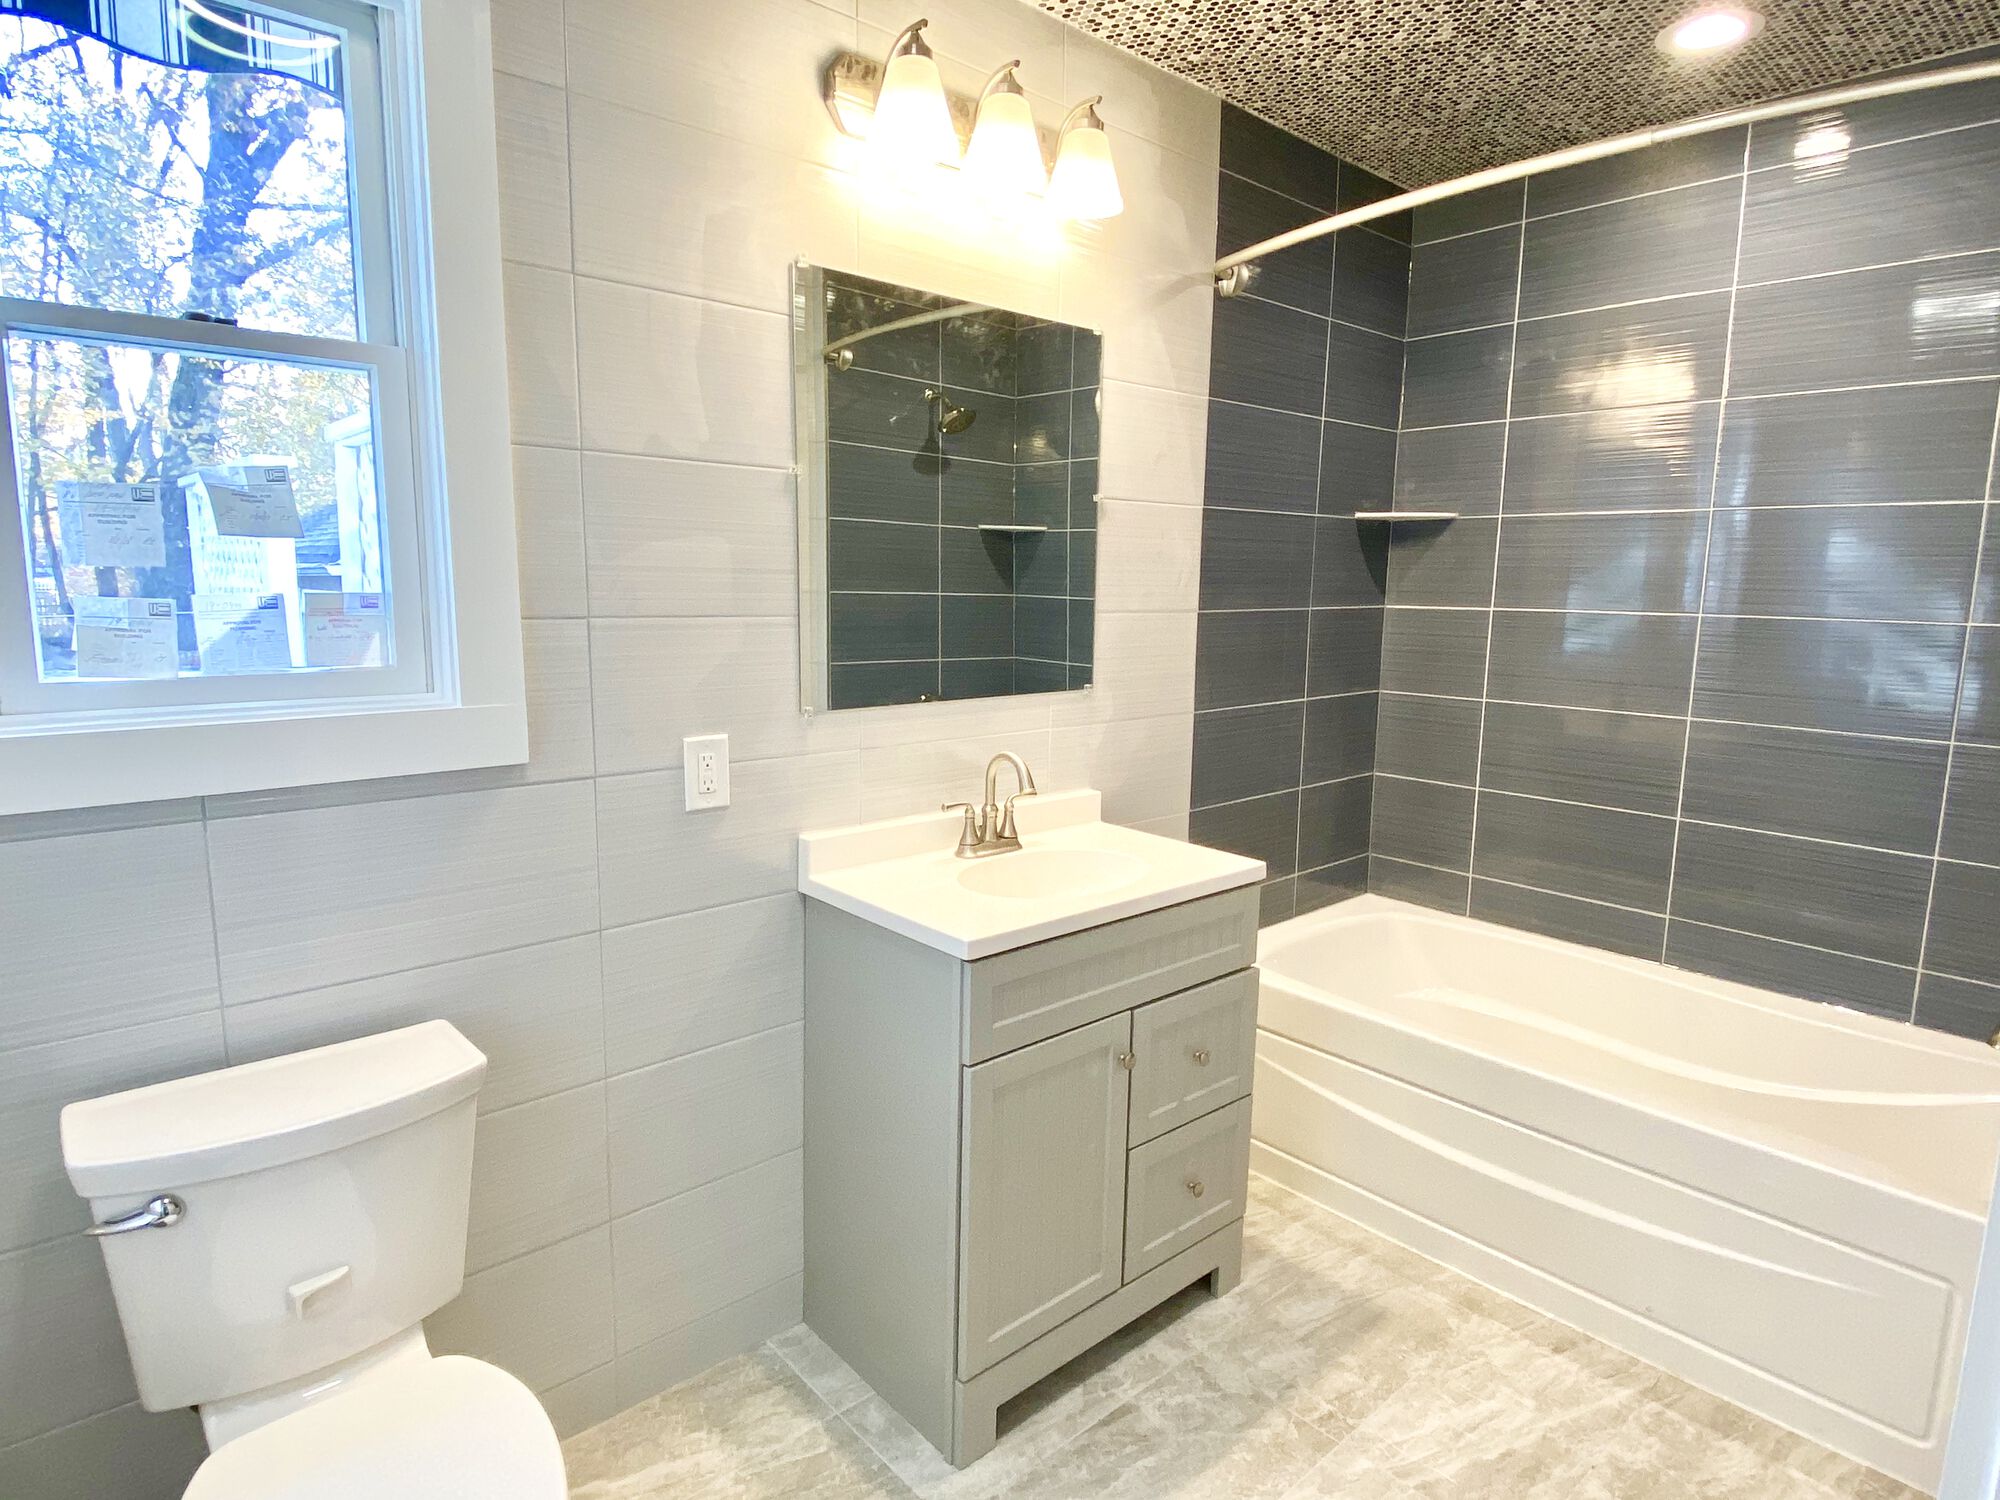 Bathroom Addition with Kohler Fixtures and Porcelain Tile in Cranford, Union County NJ